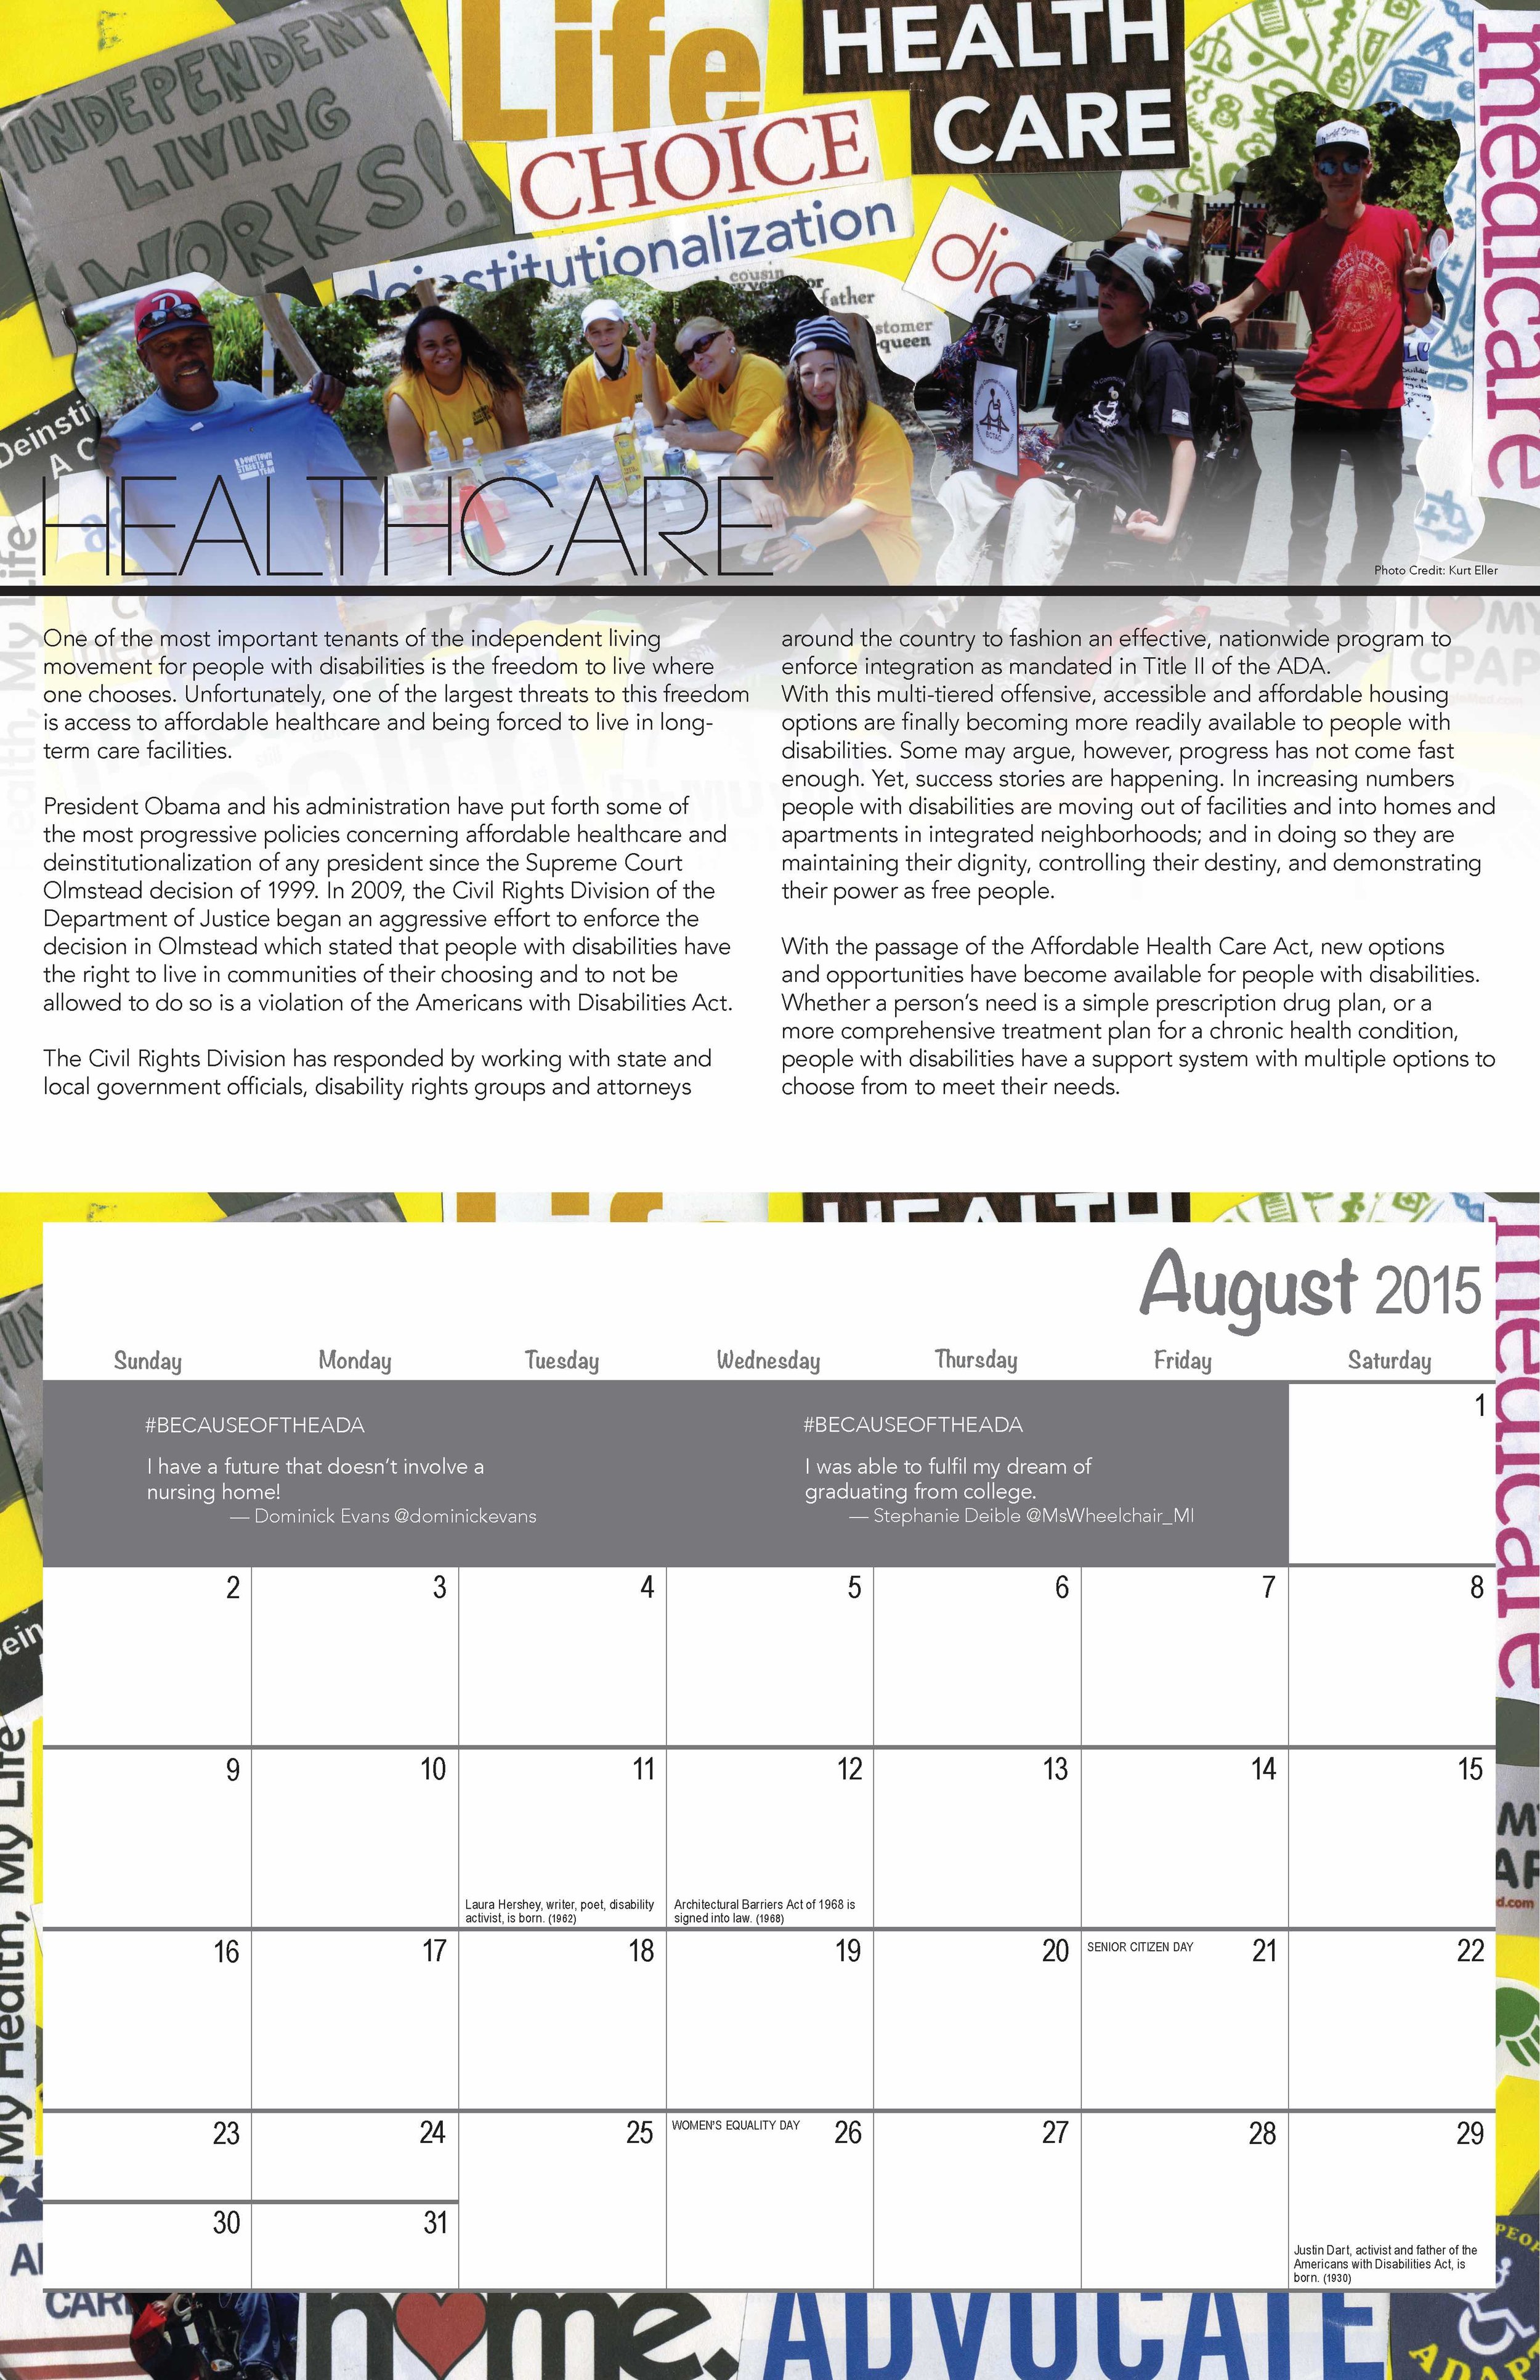   SVILC 2015 Calendar  August spread 